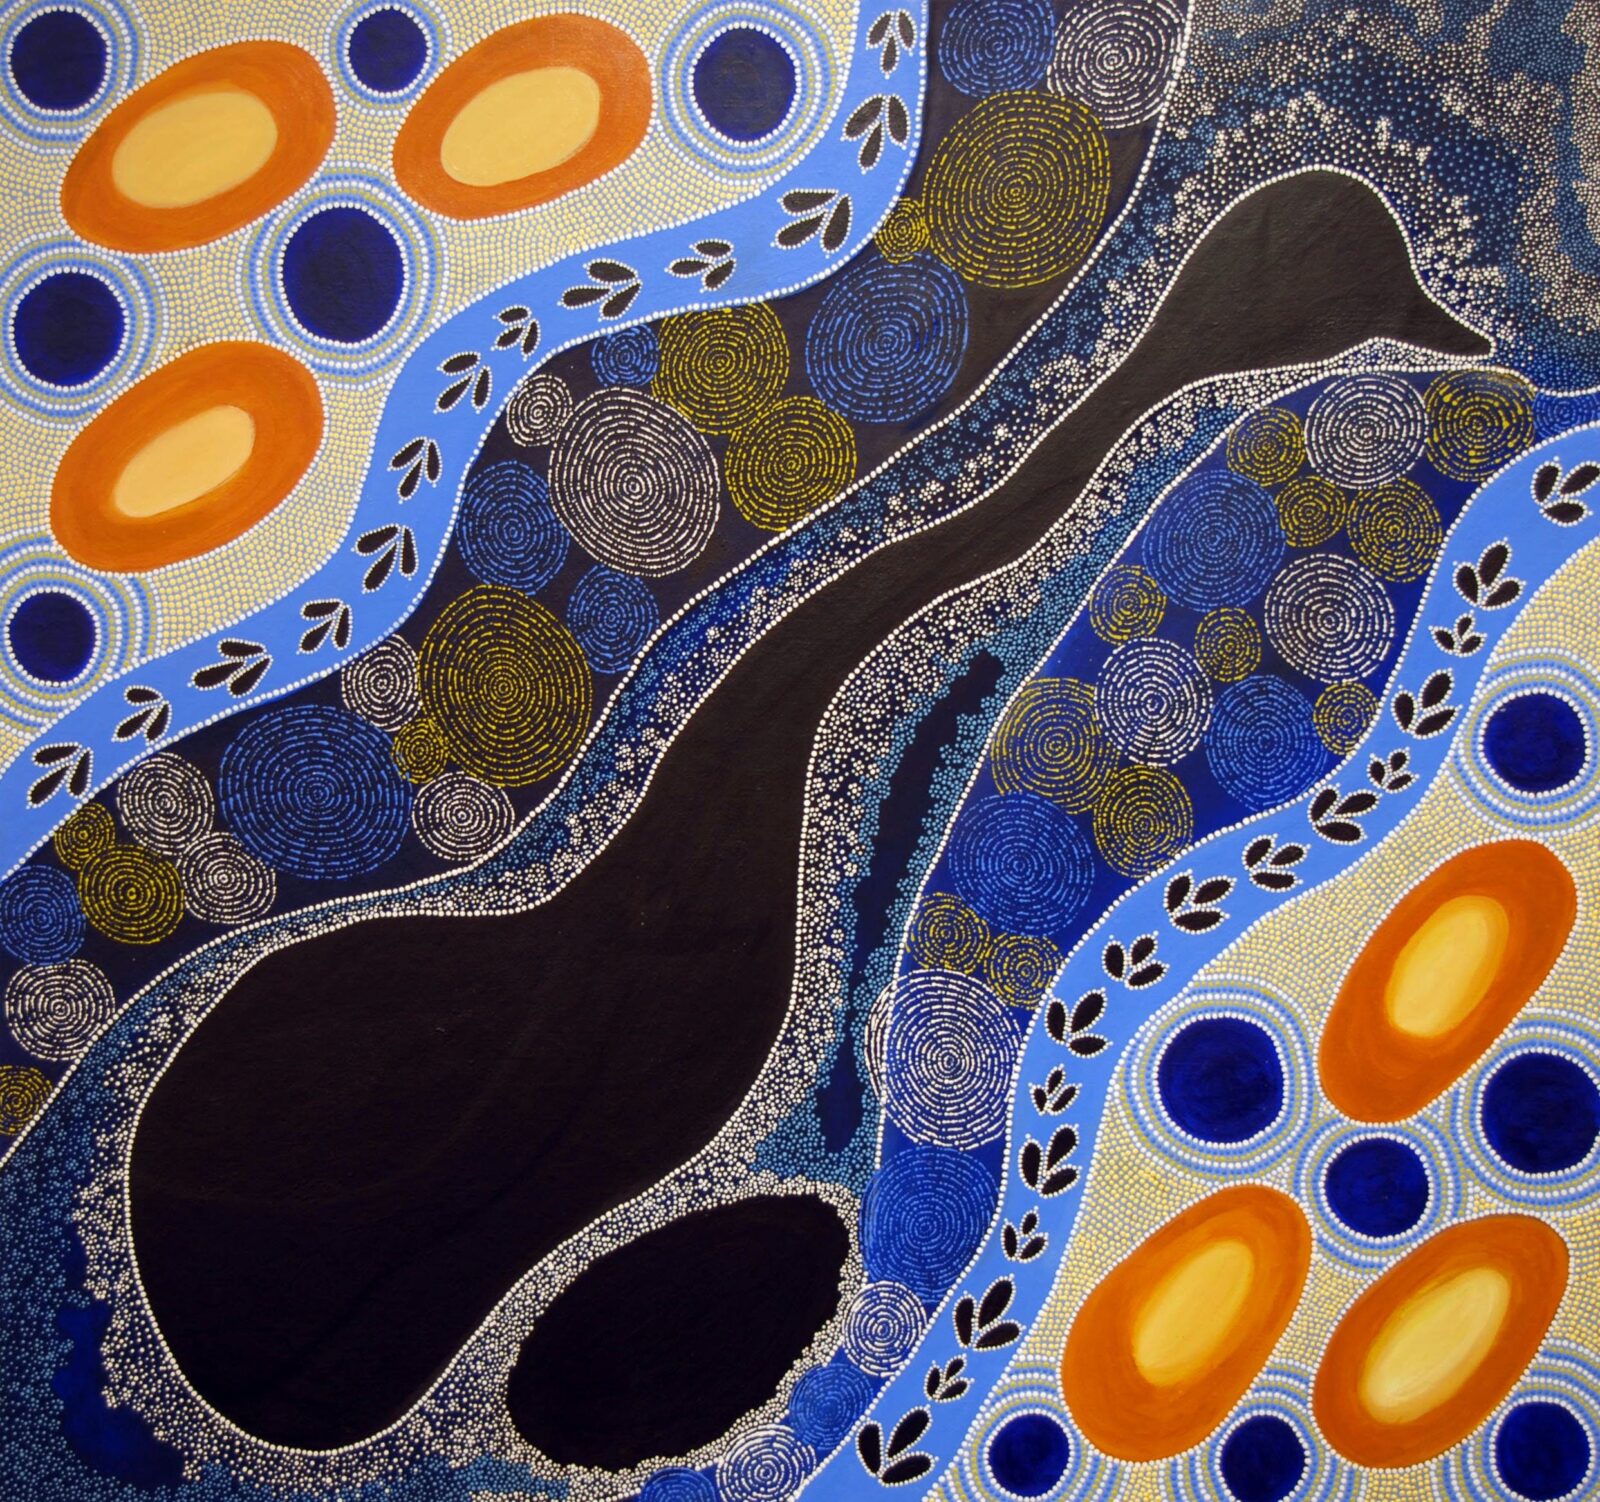 Yamaji Art, Geraldton, Western Australia